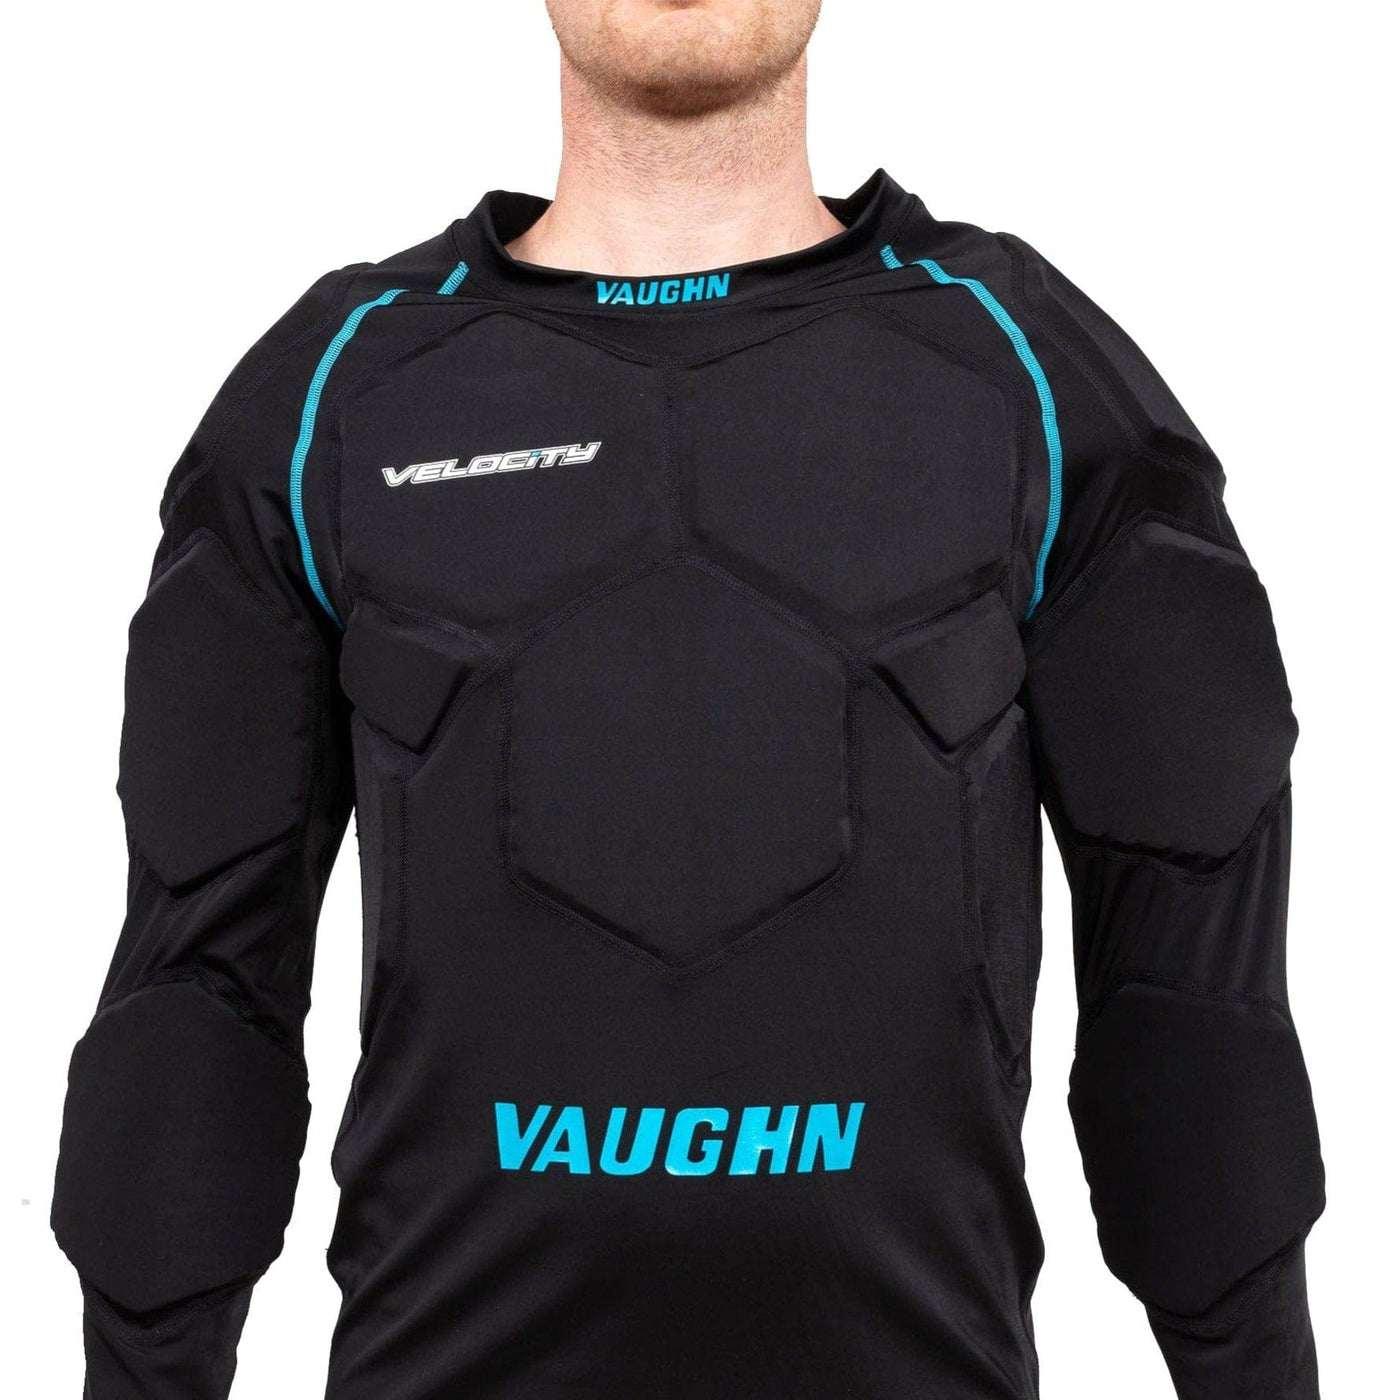 Vaughn Velocity V10 Pro Senior Goalie Padded Shirt - The Hockey Shop Source For Sports